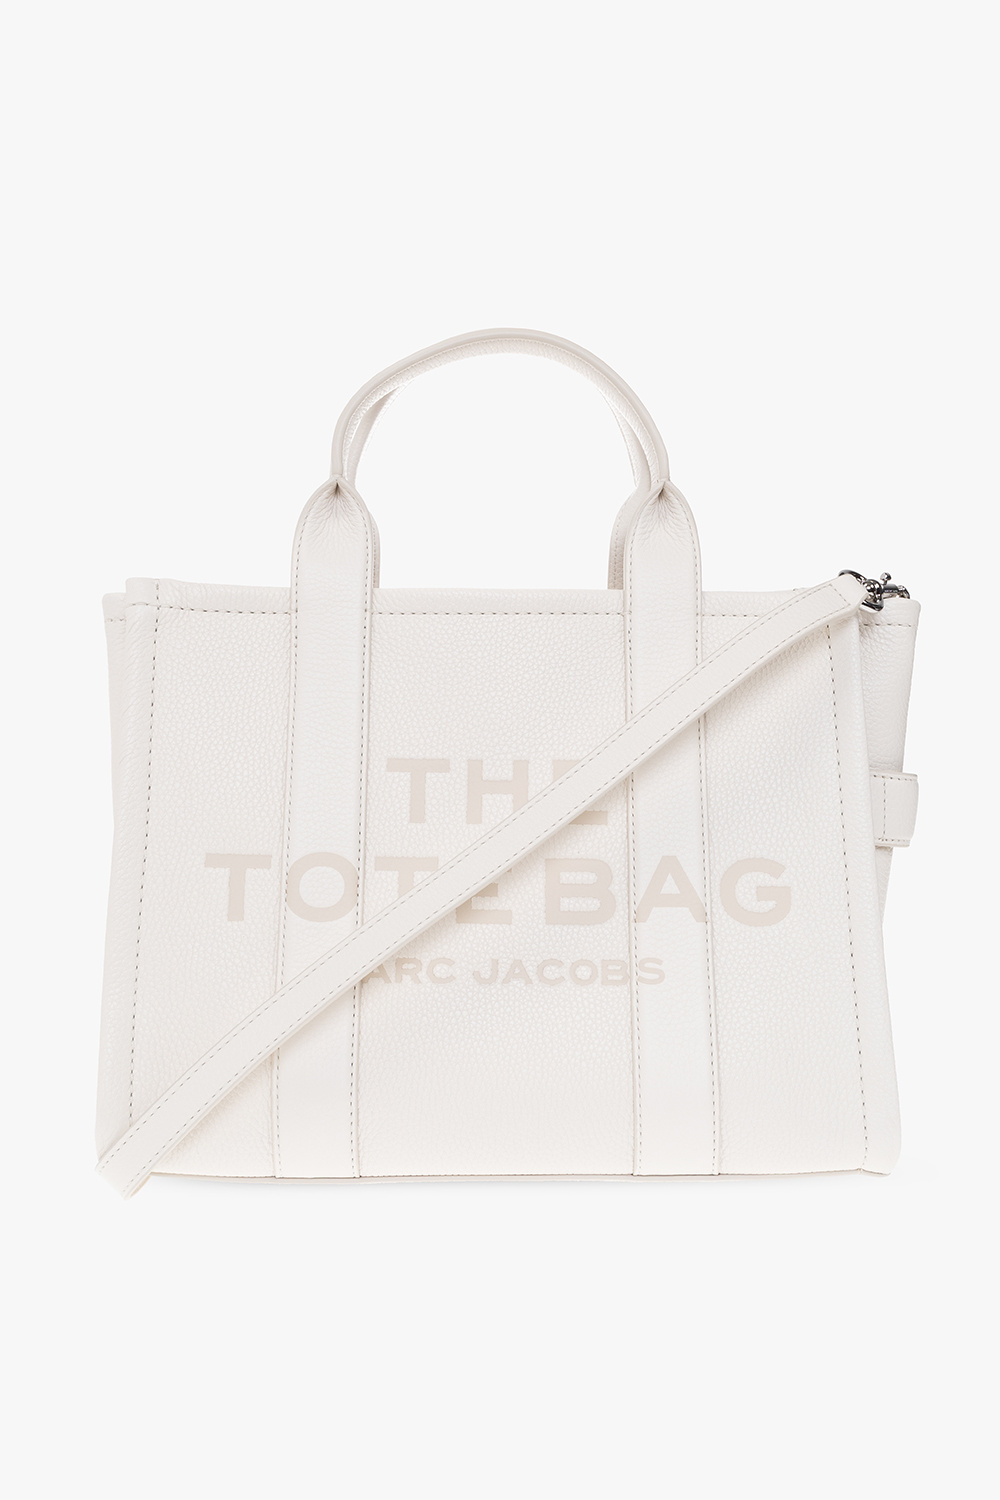 Marc+Jacobs+The+Softshot+27+Women%27s+Bag+-+Black for sale online